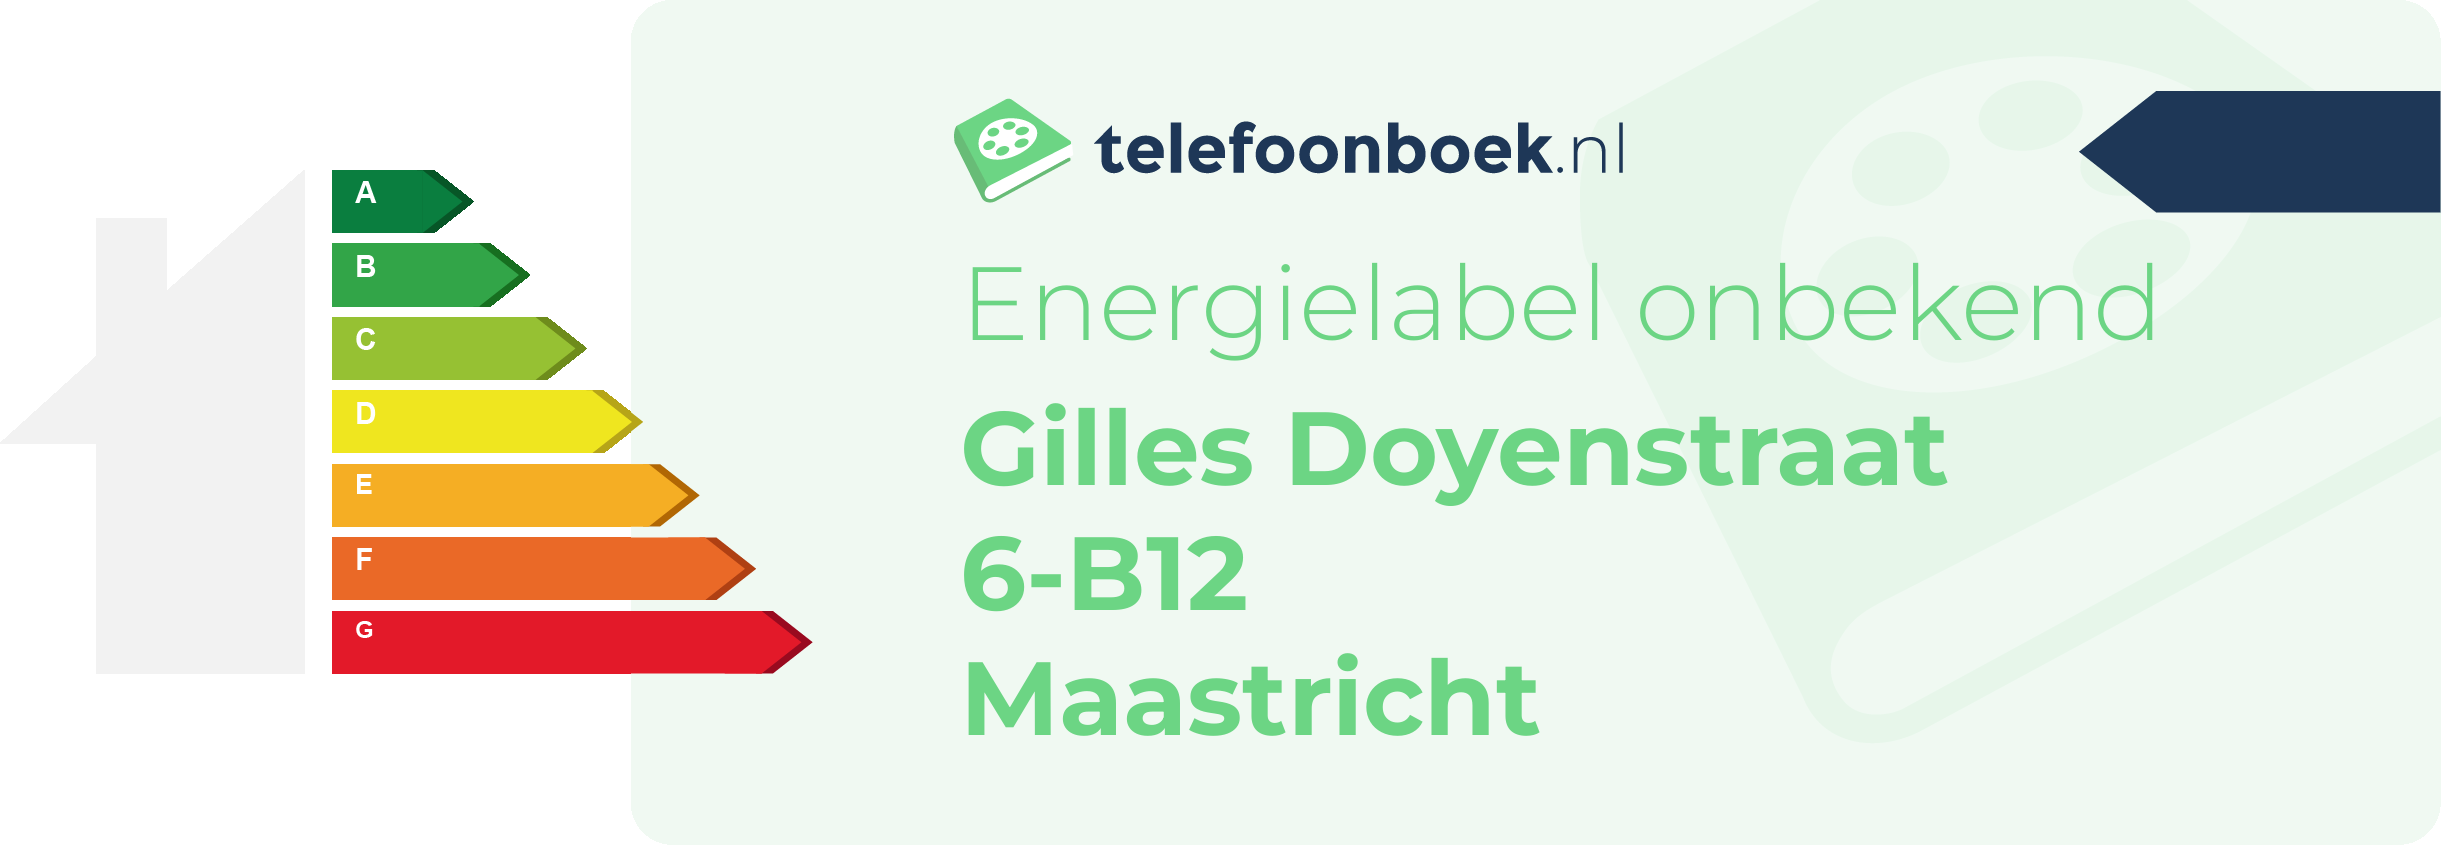 Energielabel Gilles Doyenstraat 6-B12 Maastricht